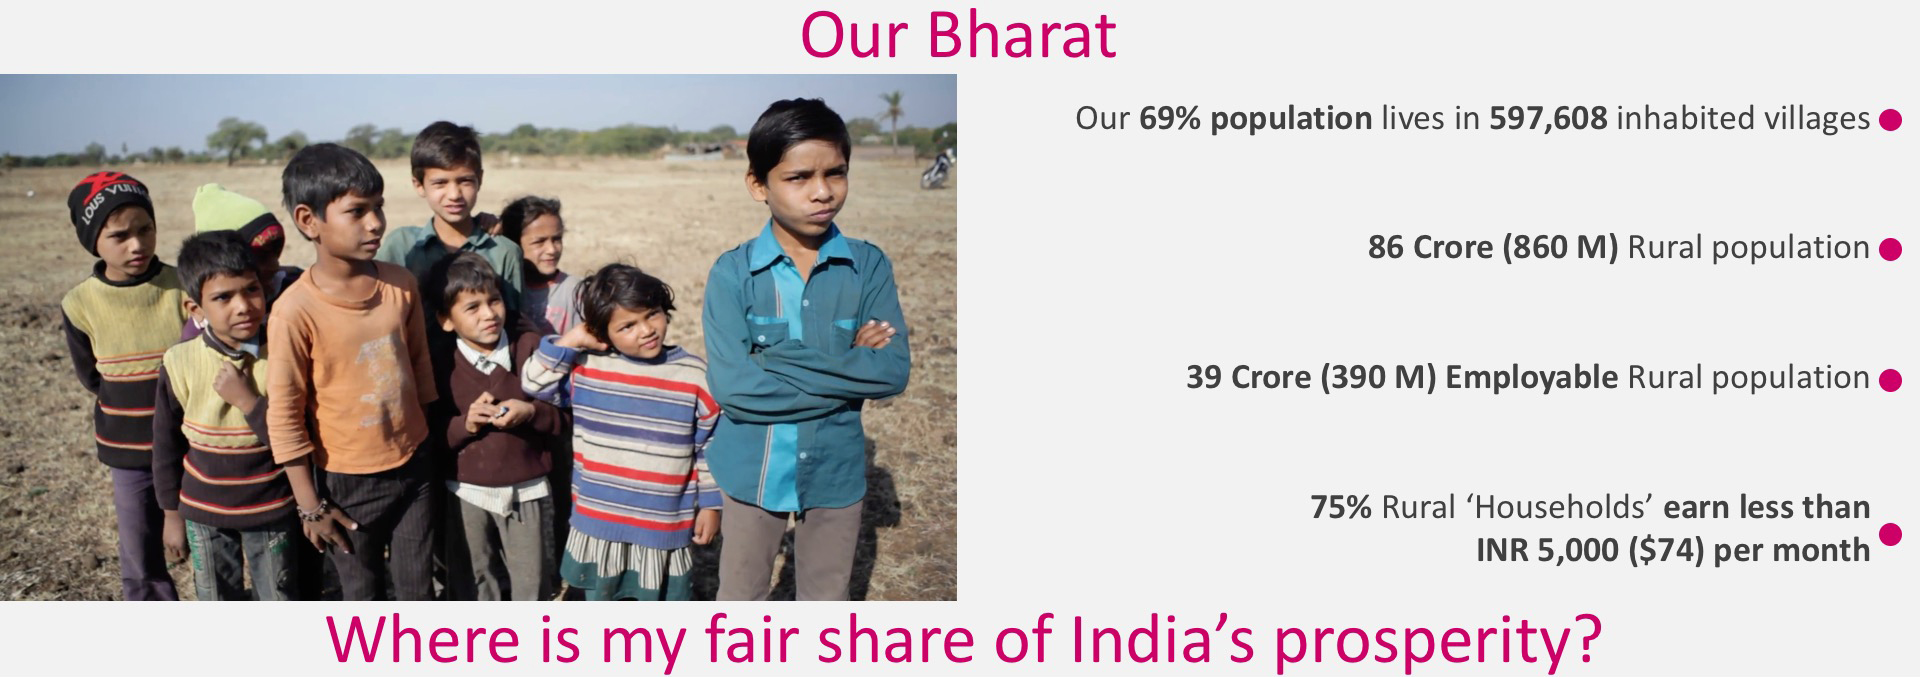 Where is my fair share of India's prosperity?